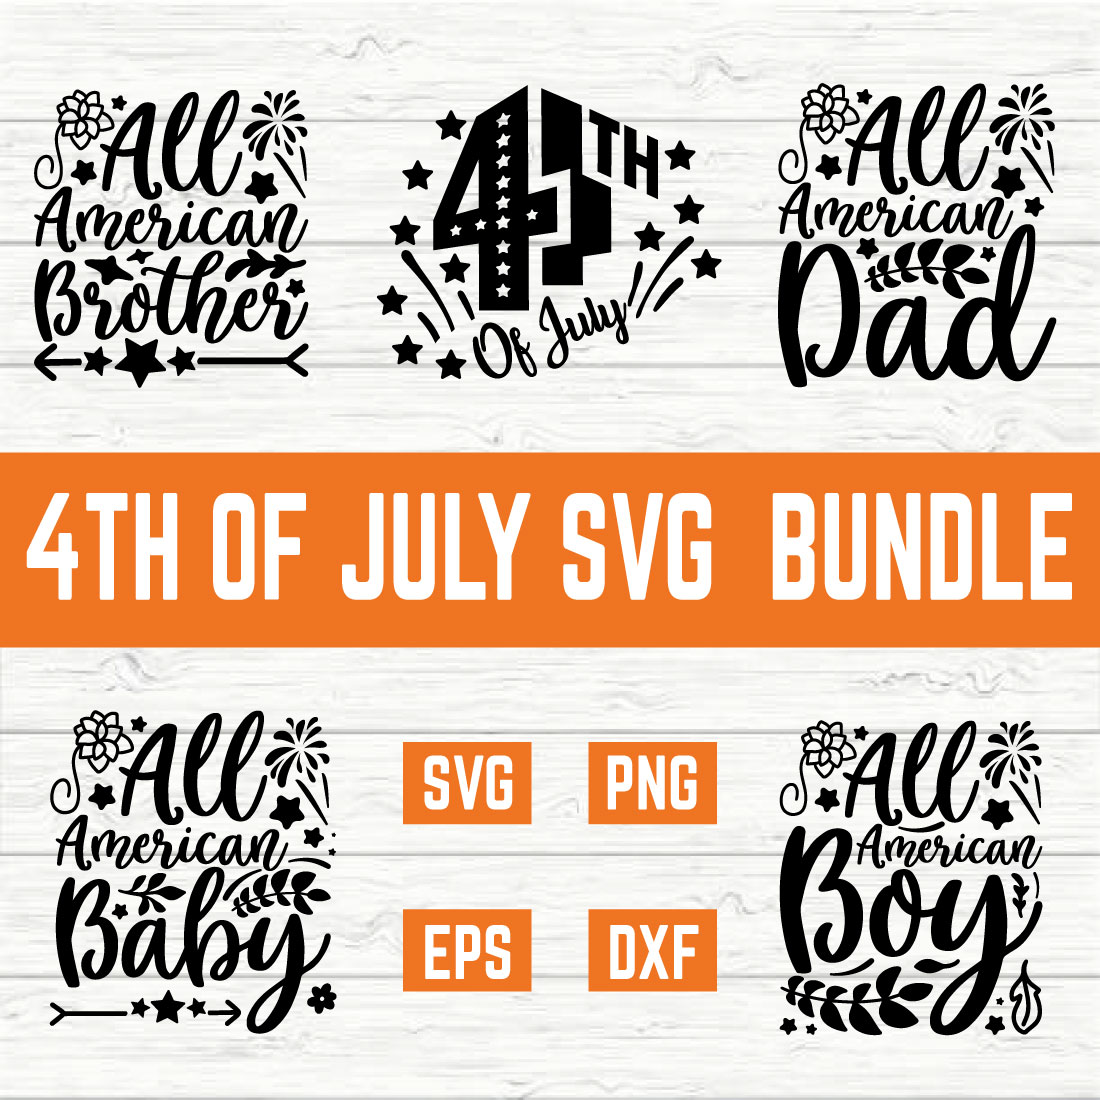 4th Of July Svg Bundle Vol 1 preview image.